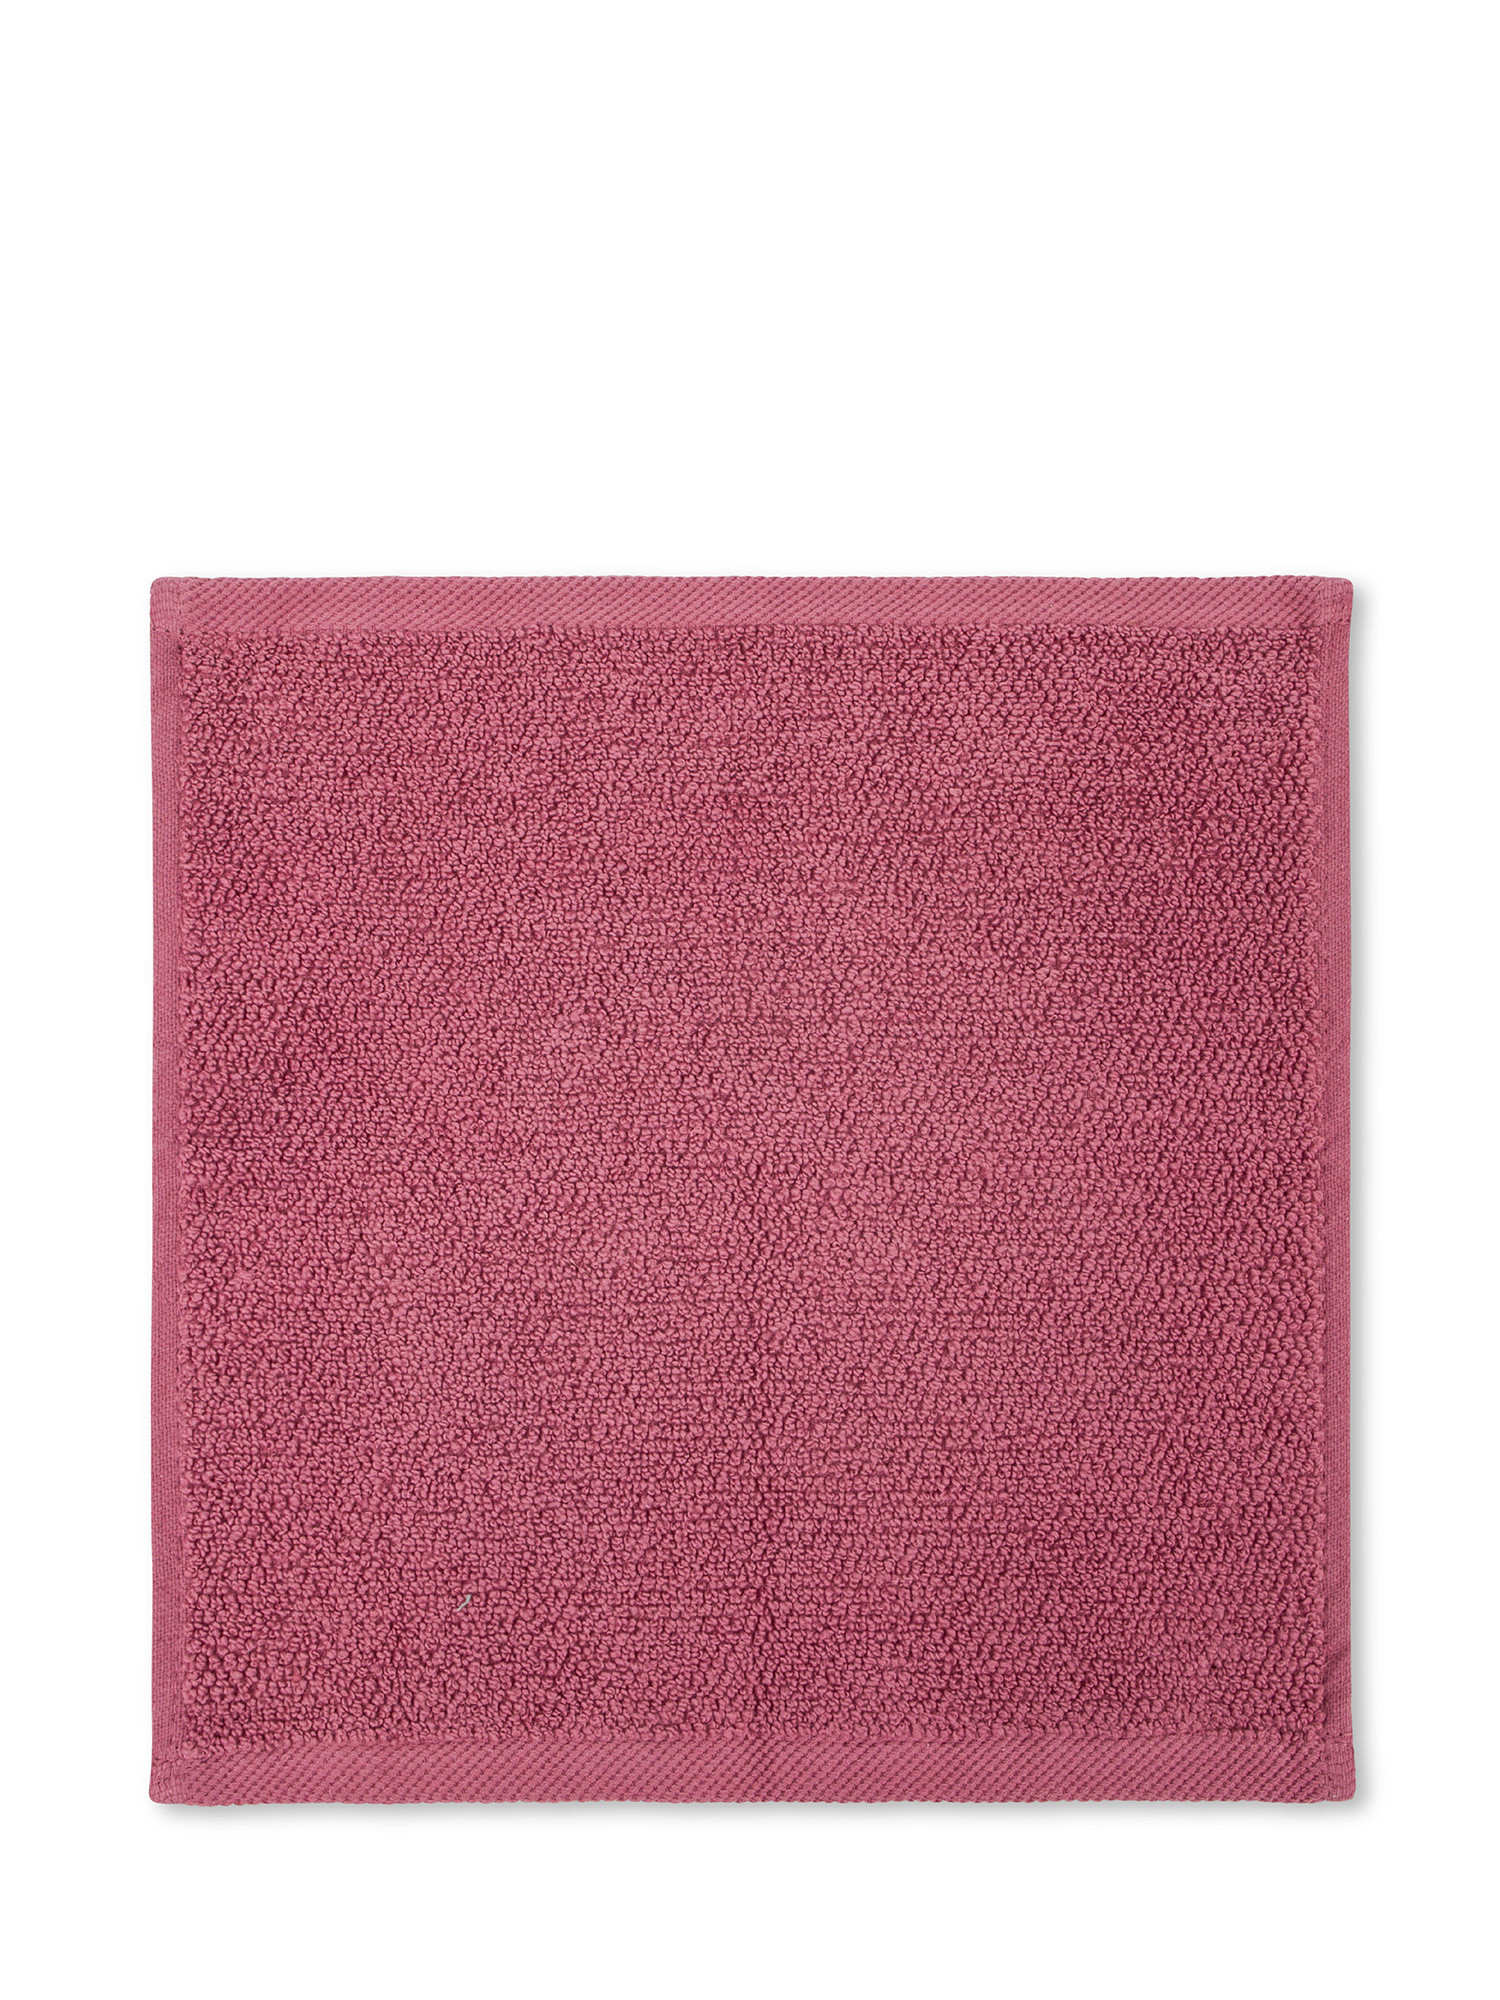 Cotton terry washcloth set of 4, Dark Pink, large image number 1